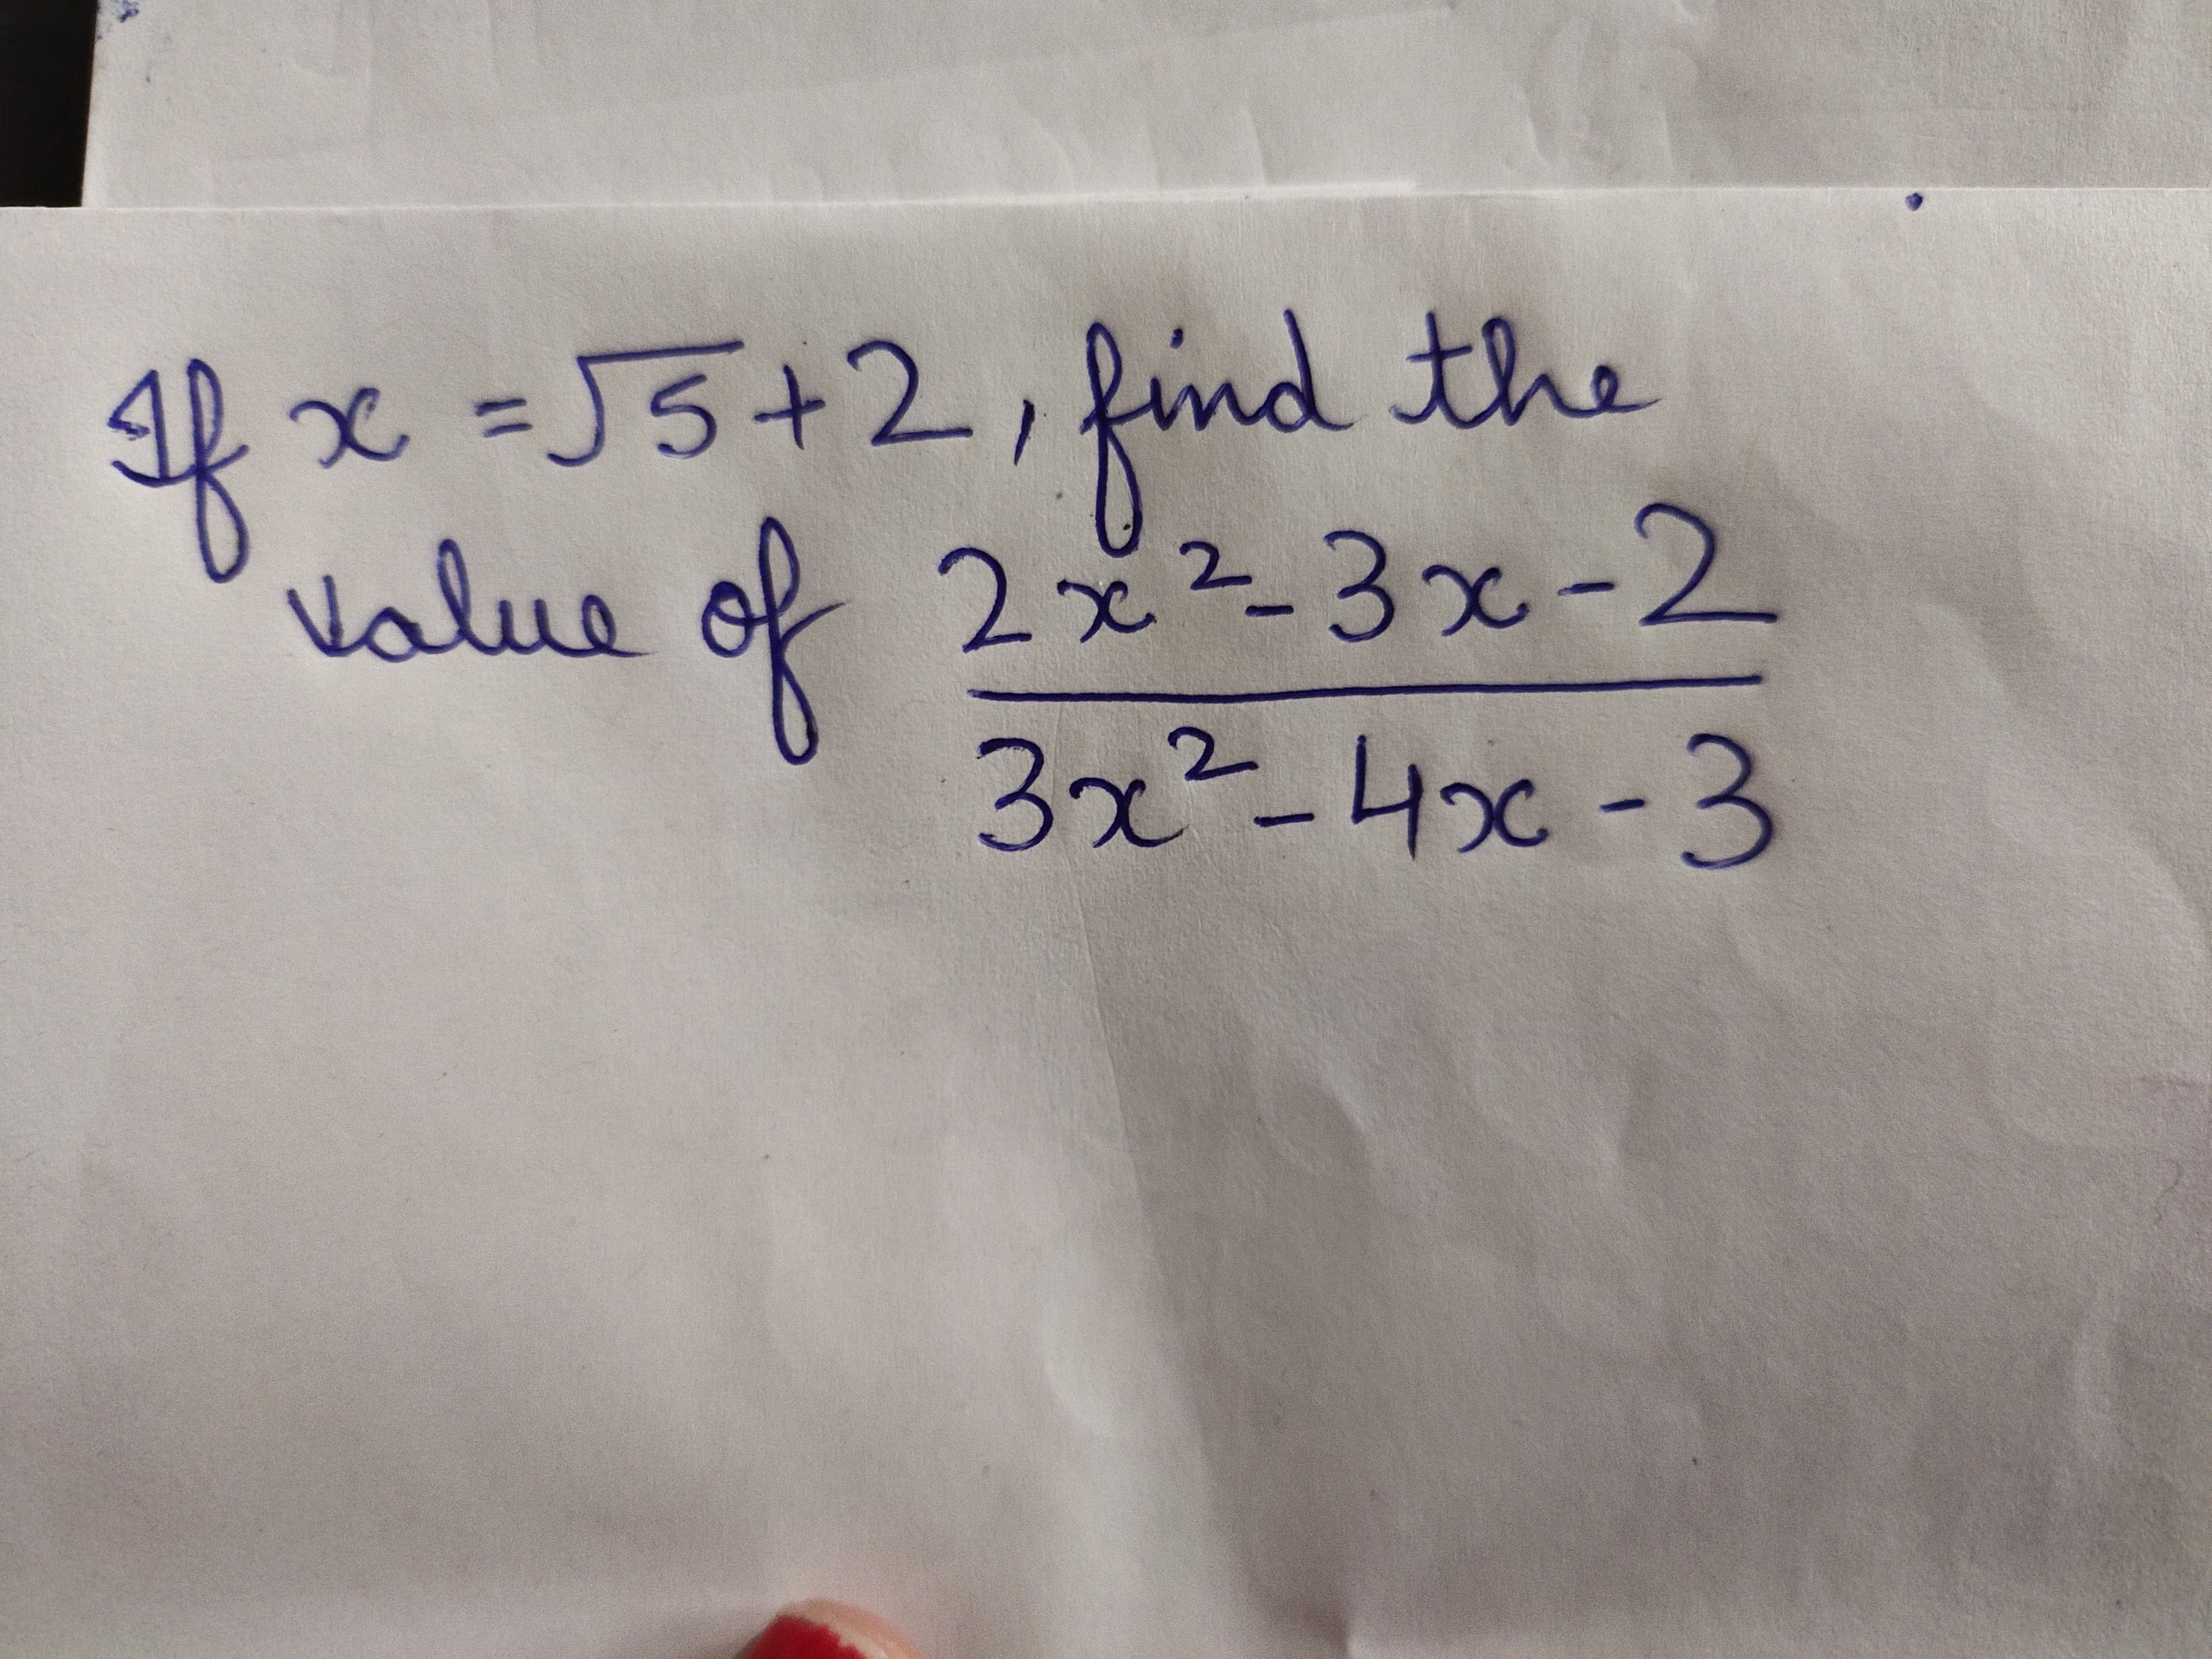 dthe
fin
2x2-3x-2
of
3x²-4>c-3
x=J5+2,
Value
2.
